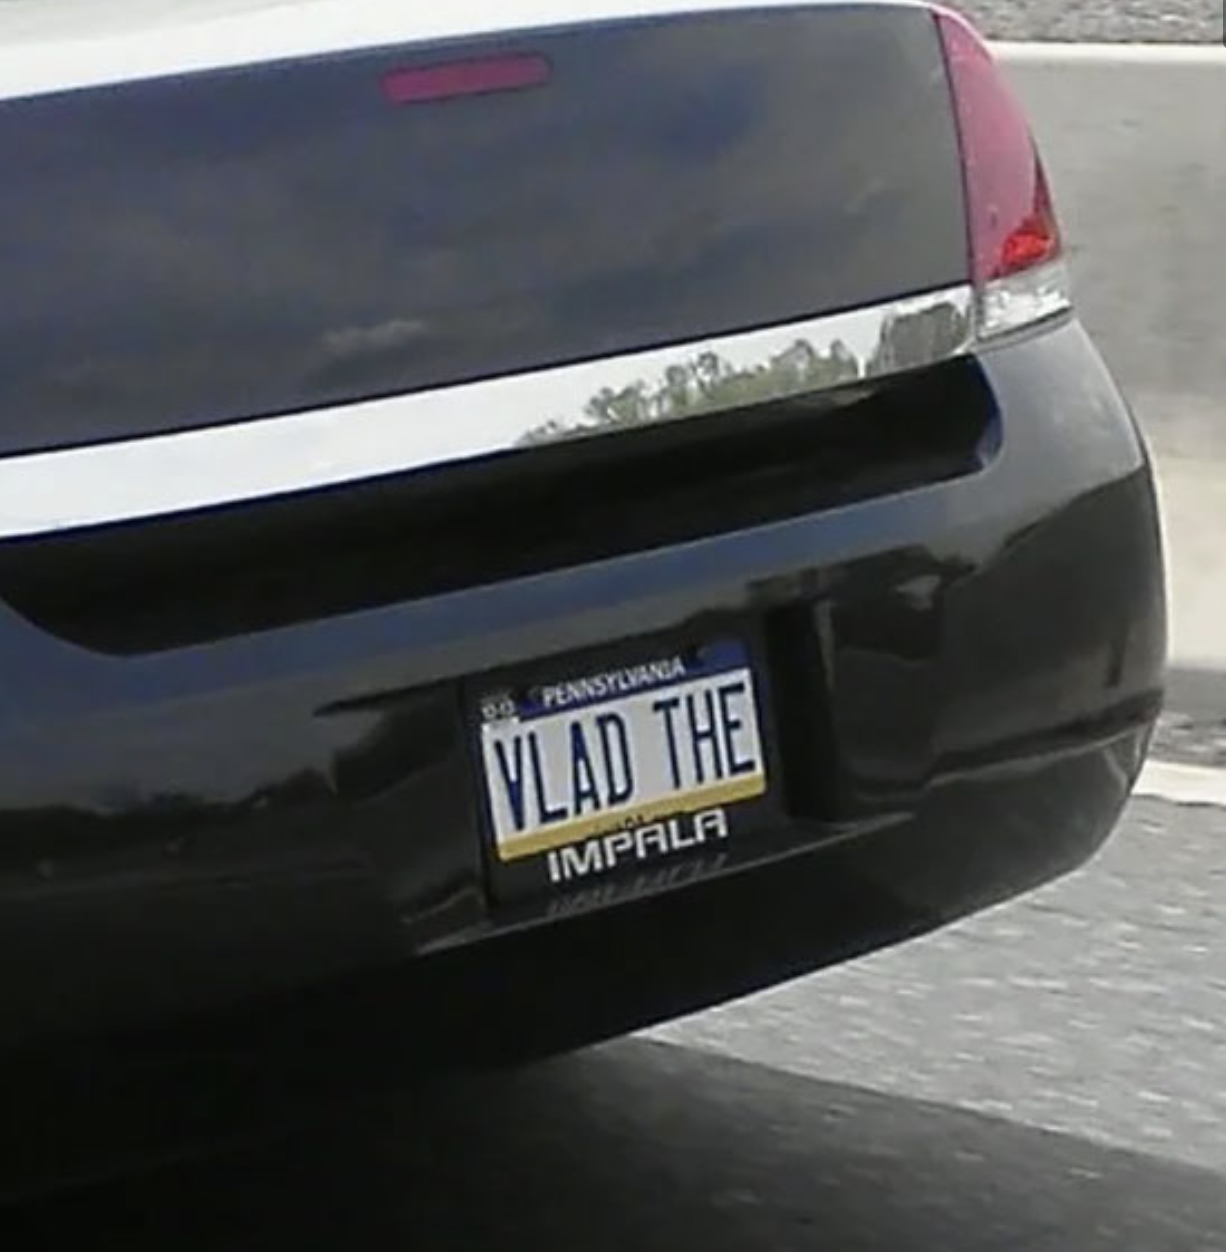 Vehicle registration plate - Pennsylvania Vlad The Impala